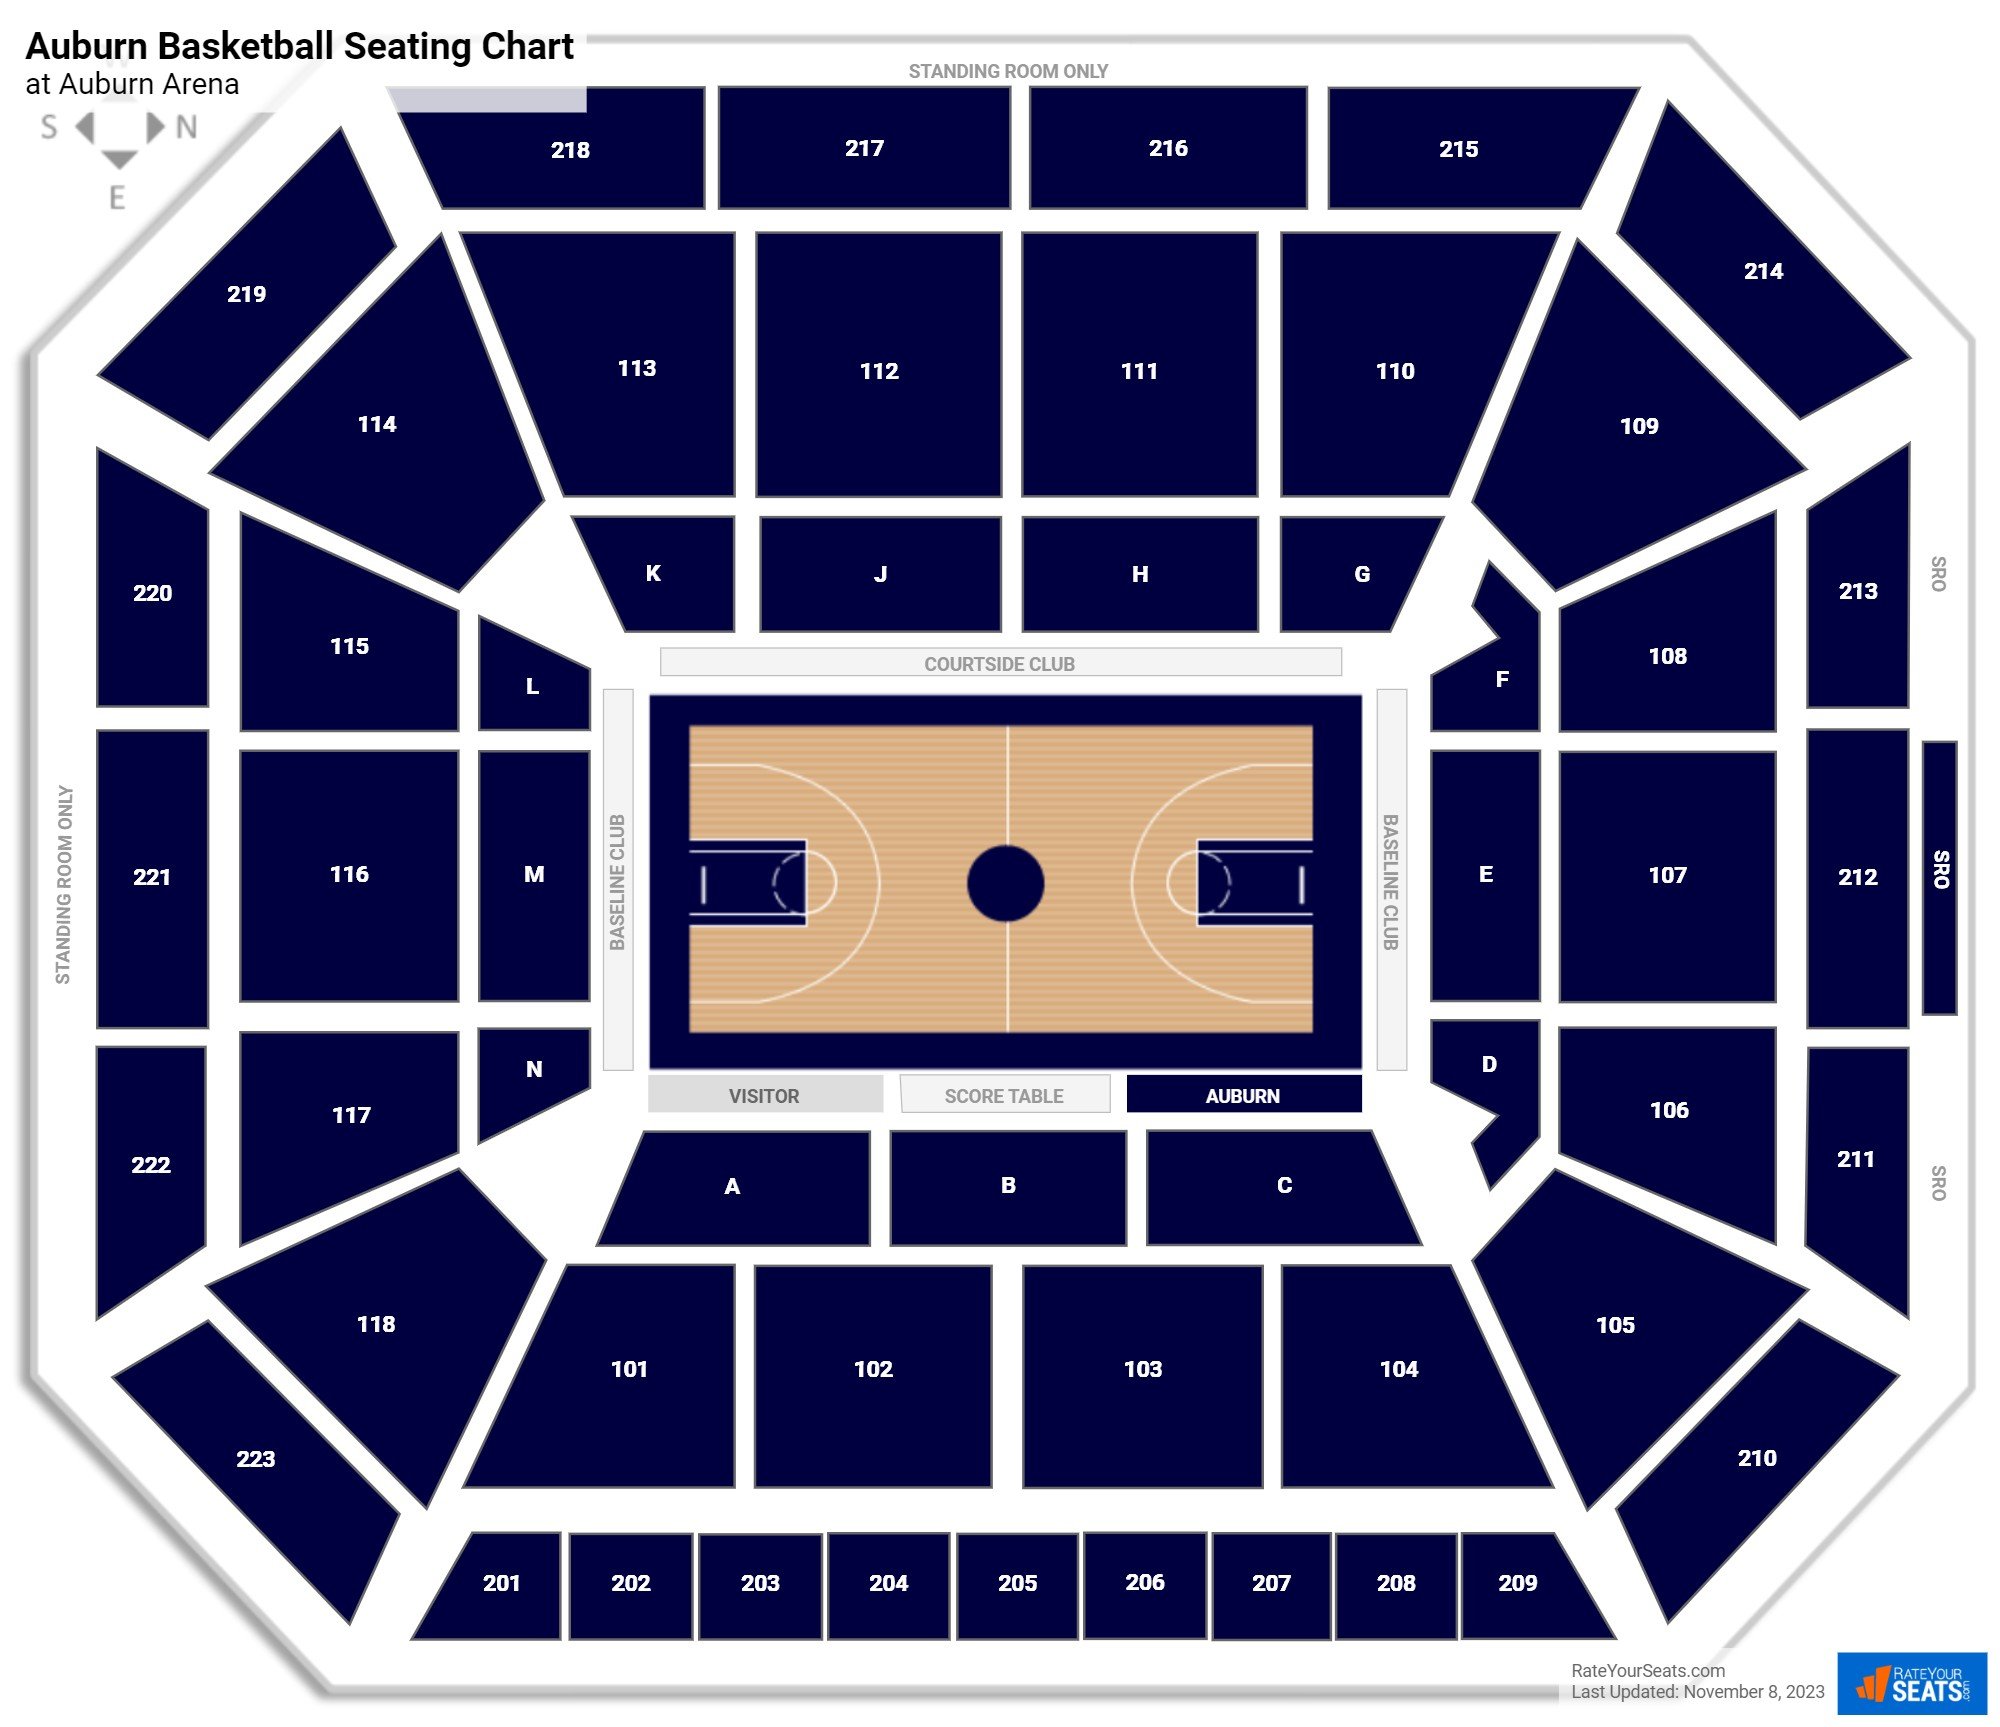 Auburn Arena Seating Chart - RateYourSeats.com